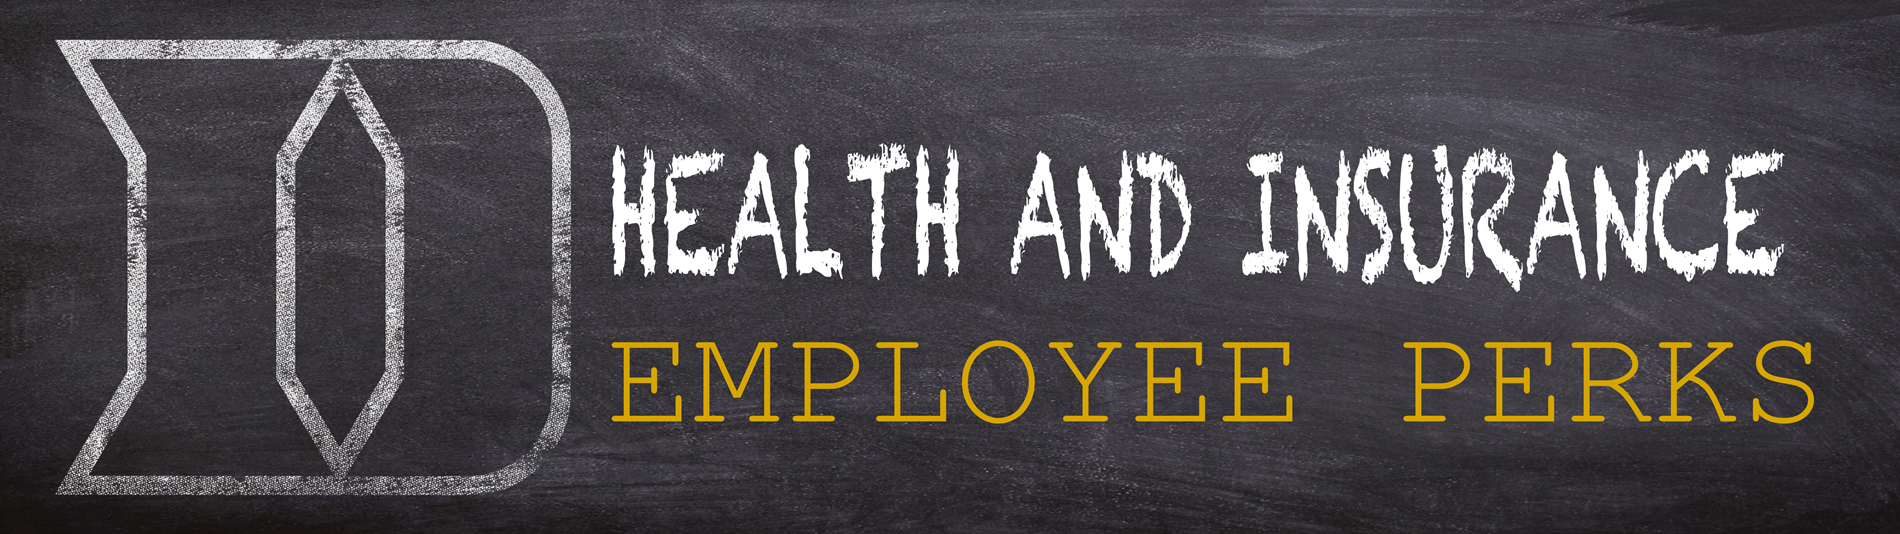 Health and Insurance Employee Perks Logo